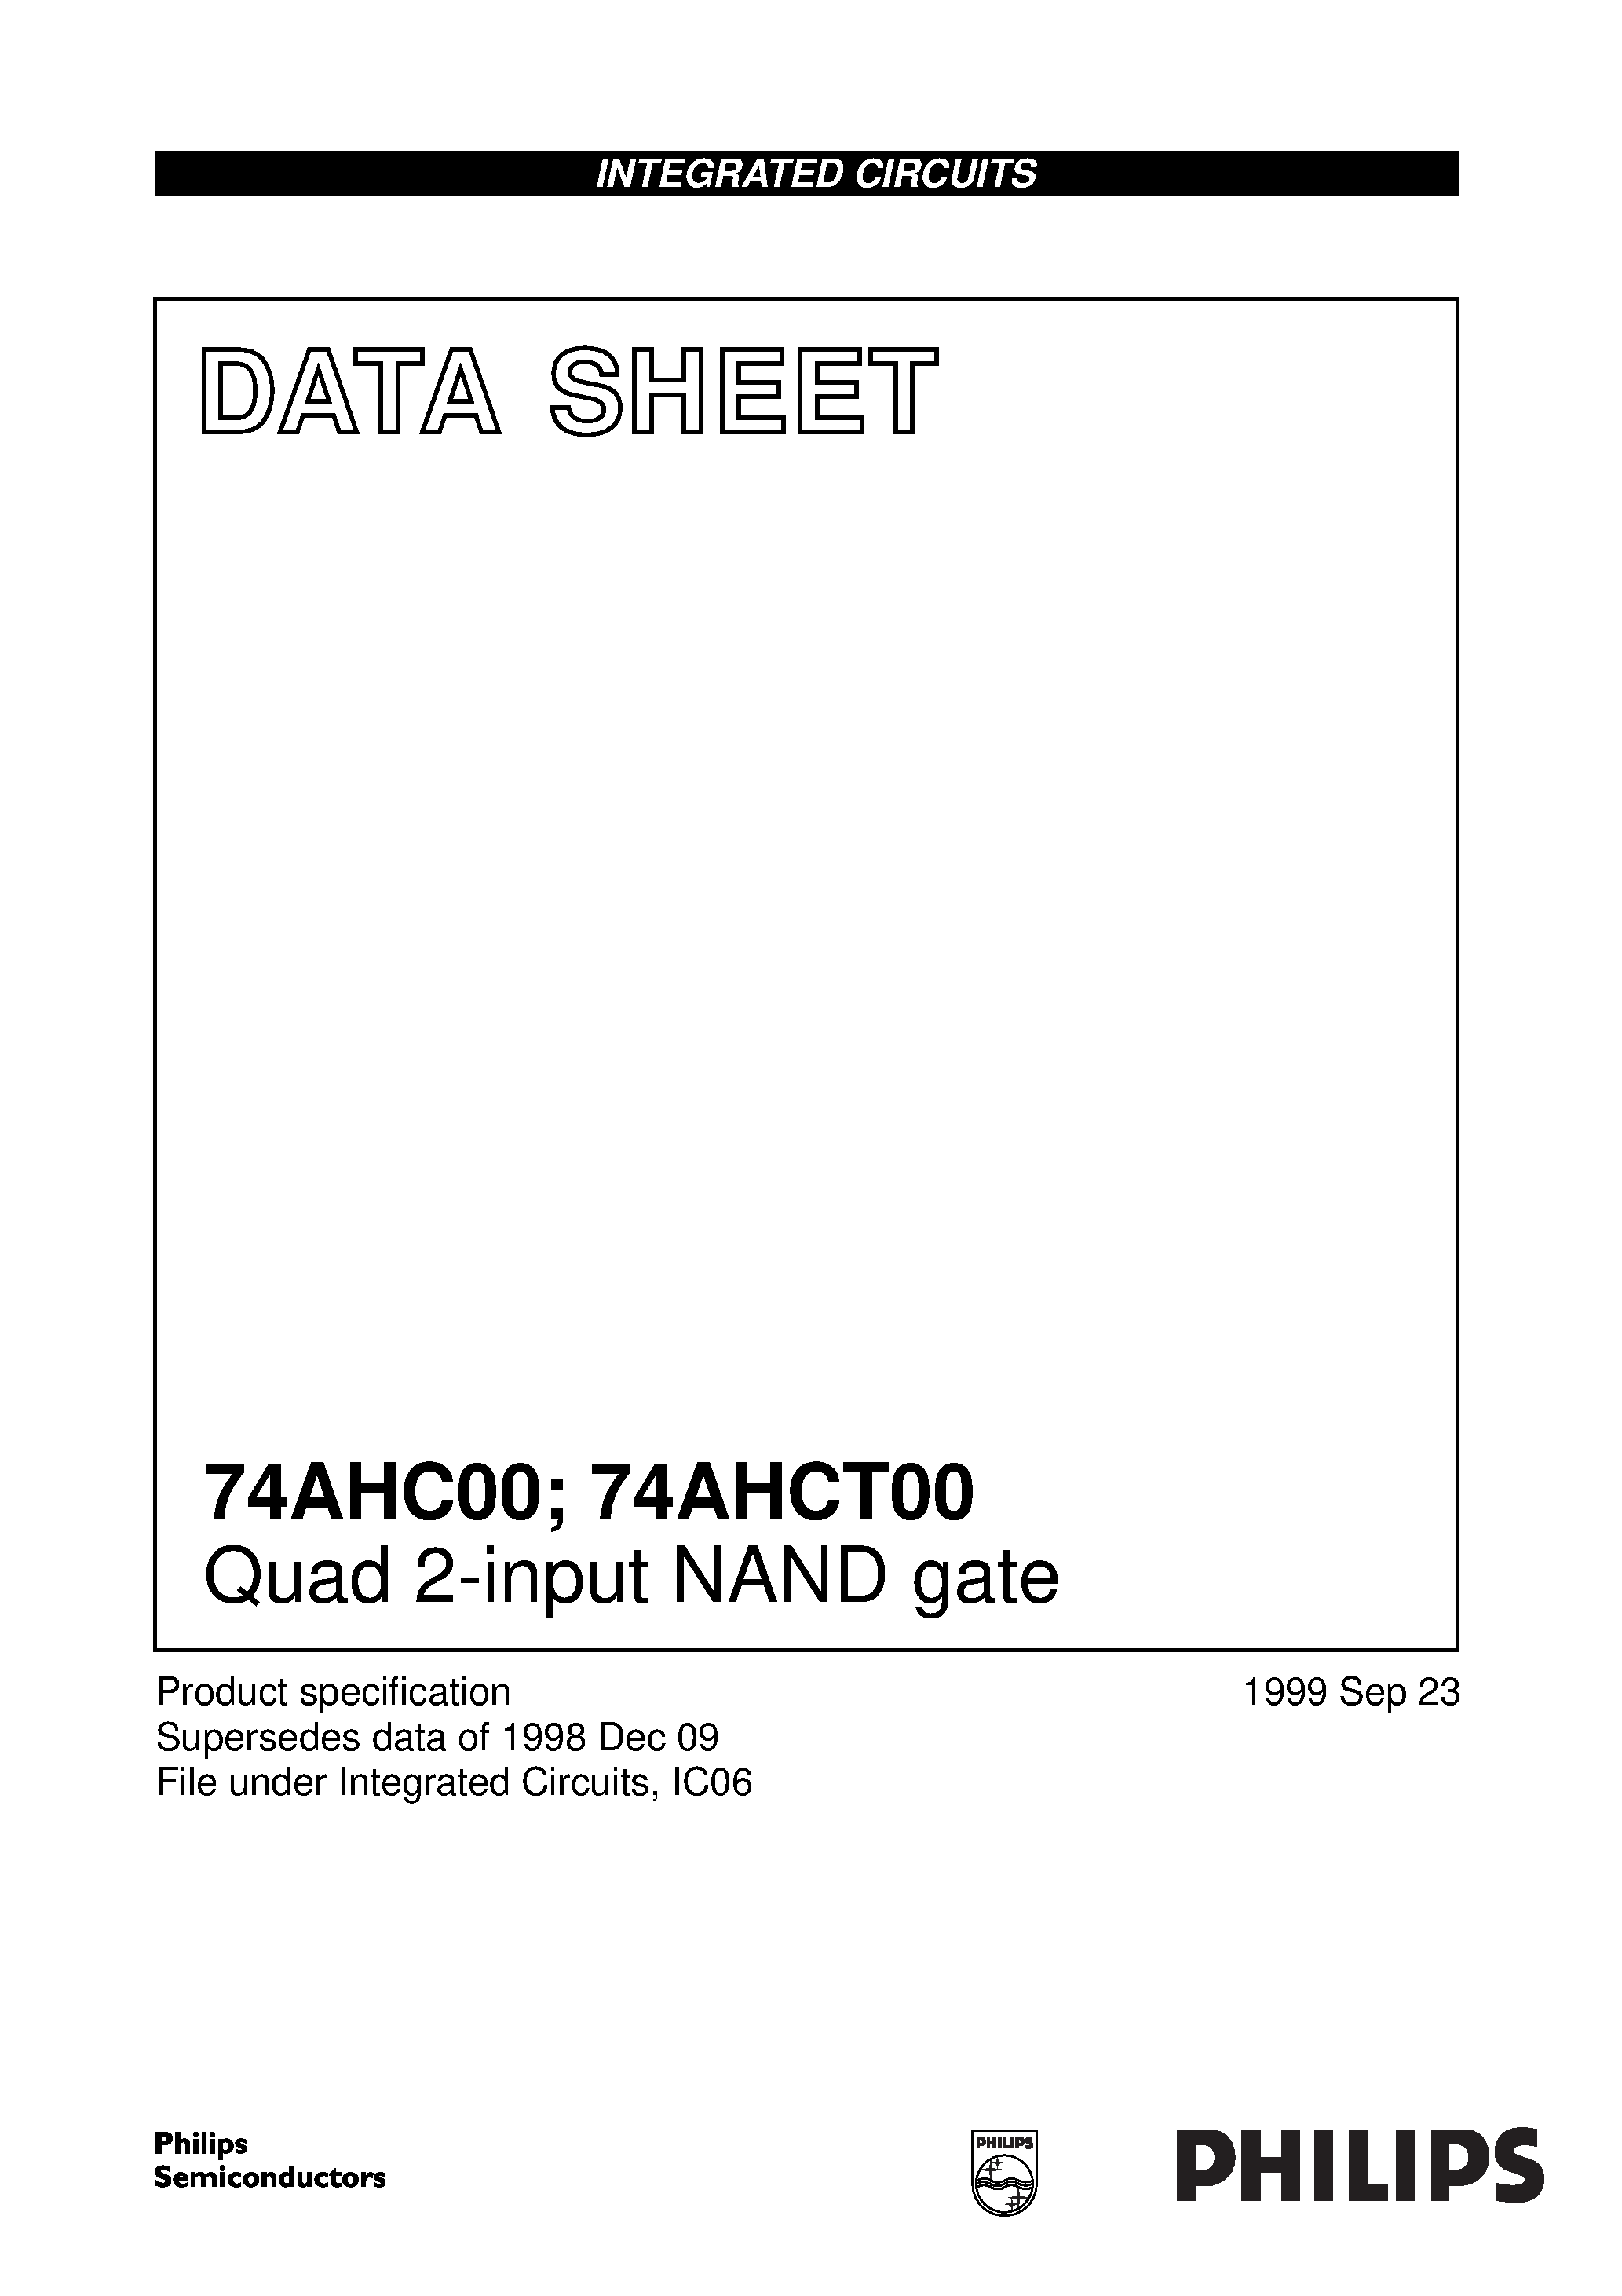 Datasheet 74AHC00PWDH - Quad 2-input NAND gate page 1